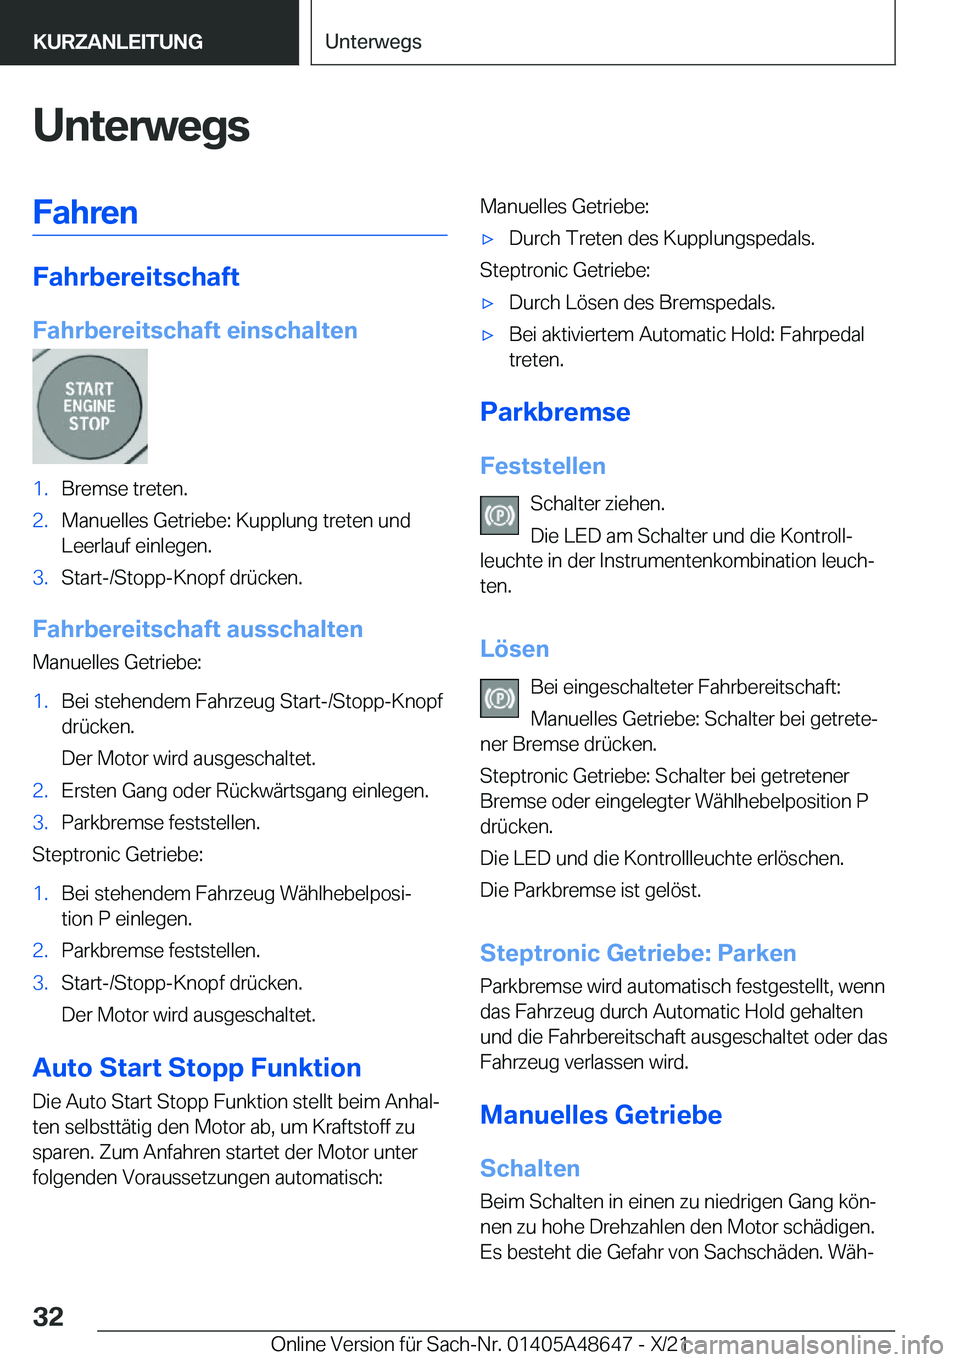 BMW 3 SERIES 2022  Betriebsanleitungen (in German) �U�n�t�e�r�w�e�g�s�F�a�h�r�e�n
�F�a�h�r�b�e�r�e�i�t�s�c�h�a�f�t
�F�a�h�r�b�e�r�e�i�t�s�c�h�a�f�t��e�i�n�s�c�h�a�l�t�e�n
�1�.�B�r�e�m�s�e��t�r�e�t�e�n�.�2�.�M�a�n�u�e�l�l�e�s��G�e�t�r�i�e�b�e�:��K�